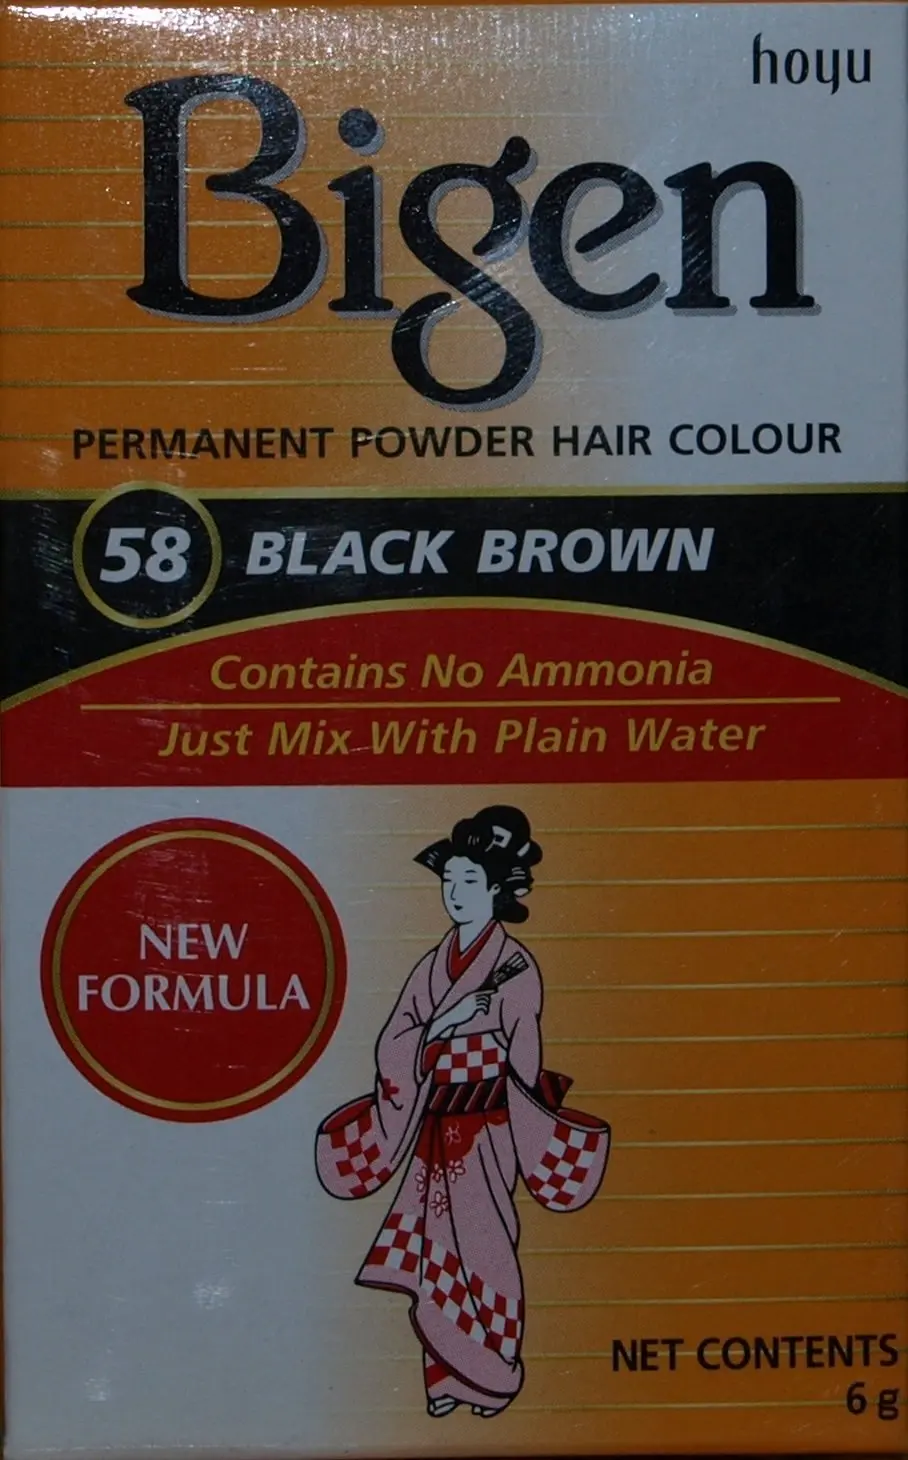 Bigen Permanent Powder Hair Color Chart